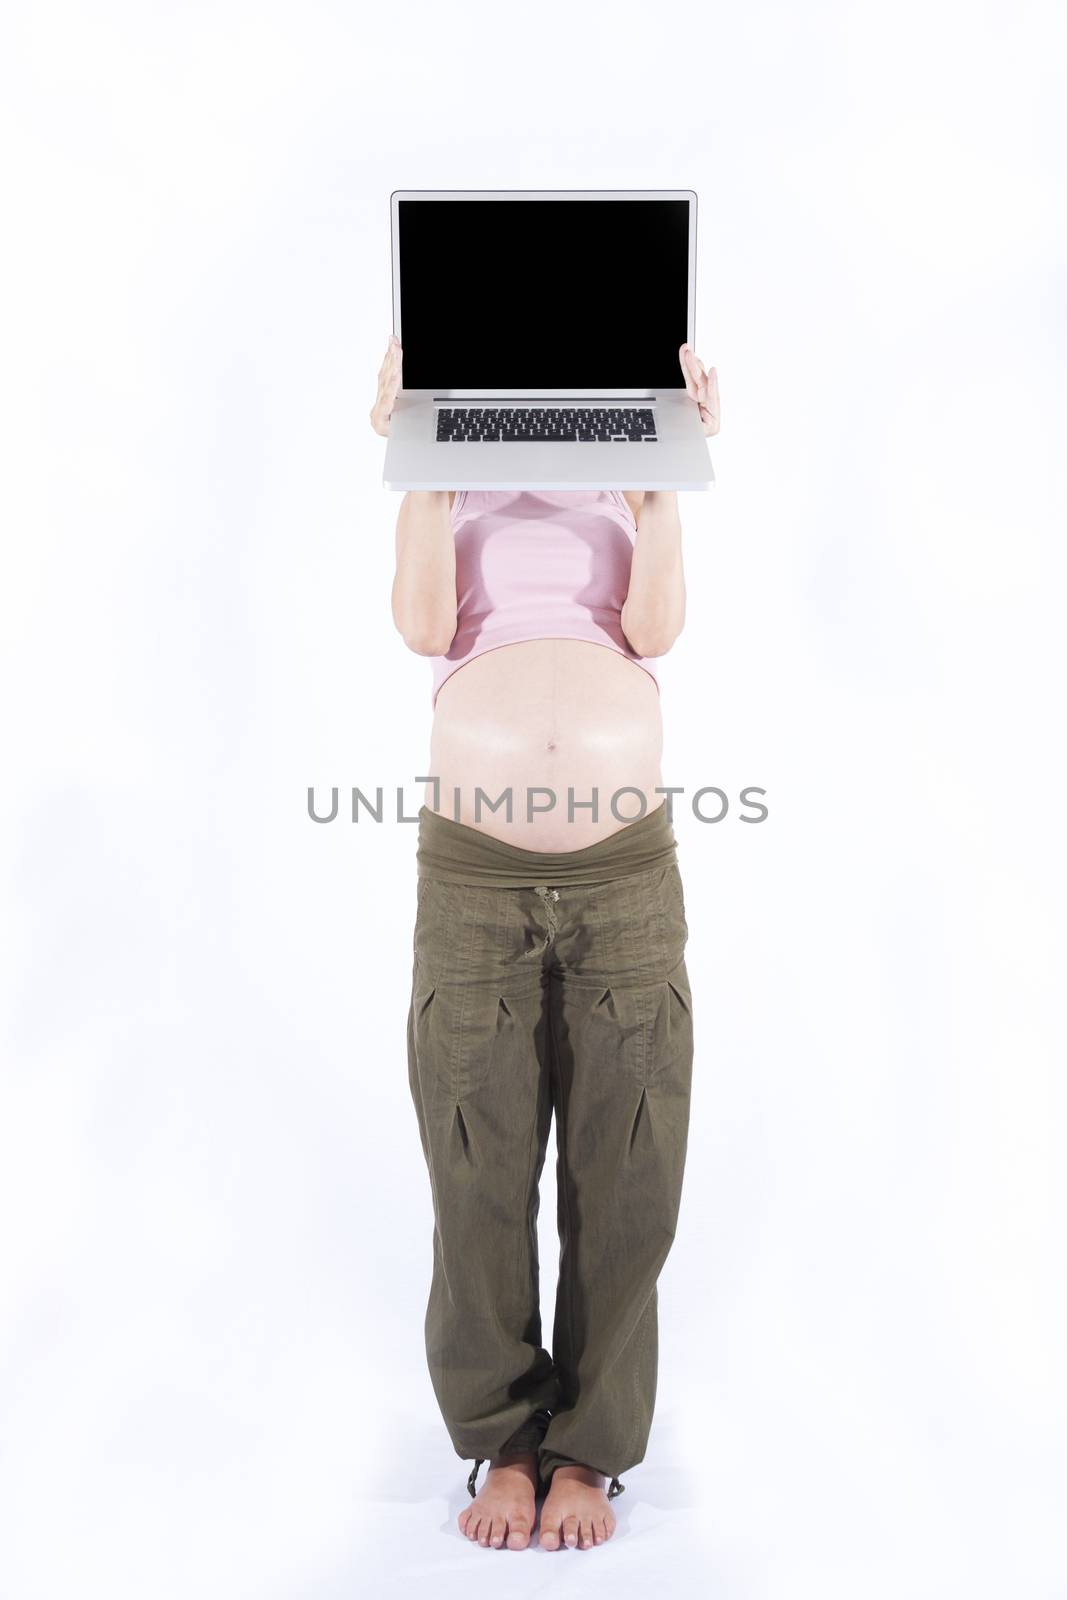 computer pregnant woman by quintanilla